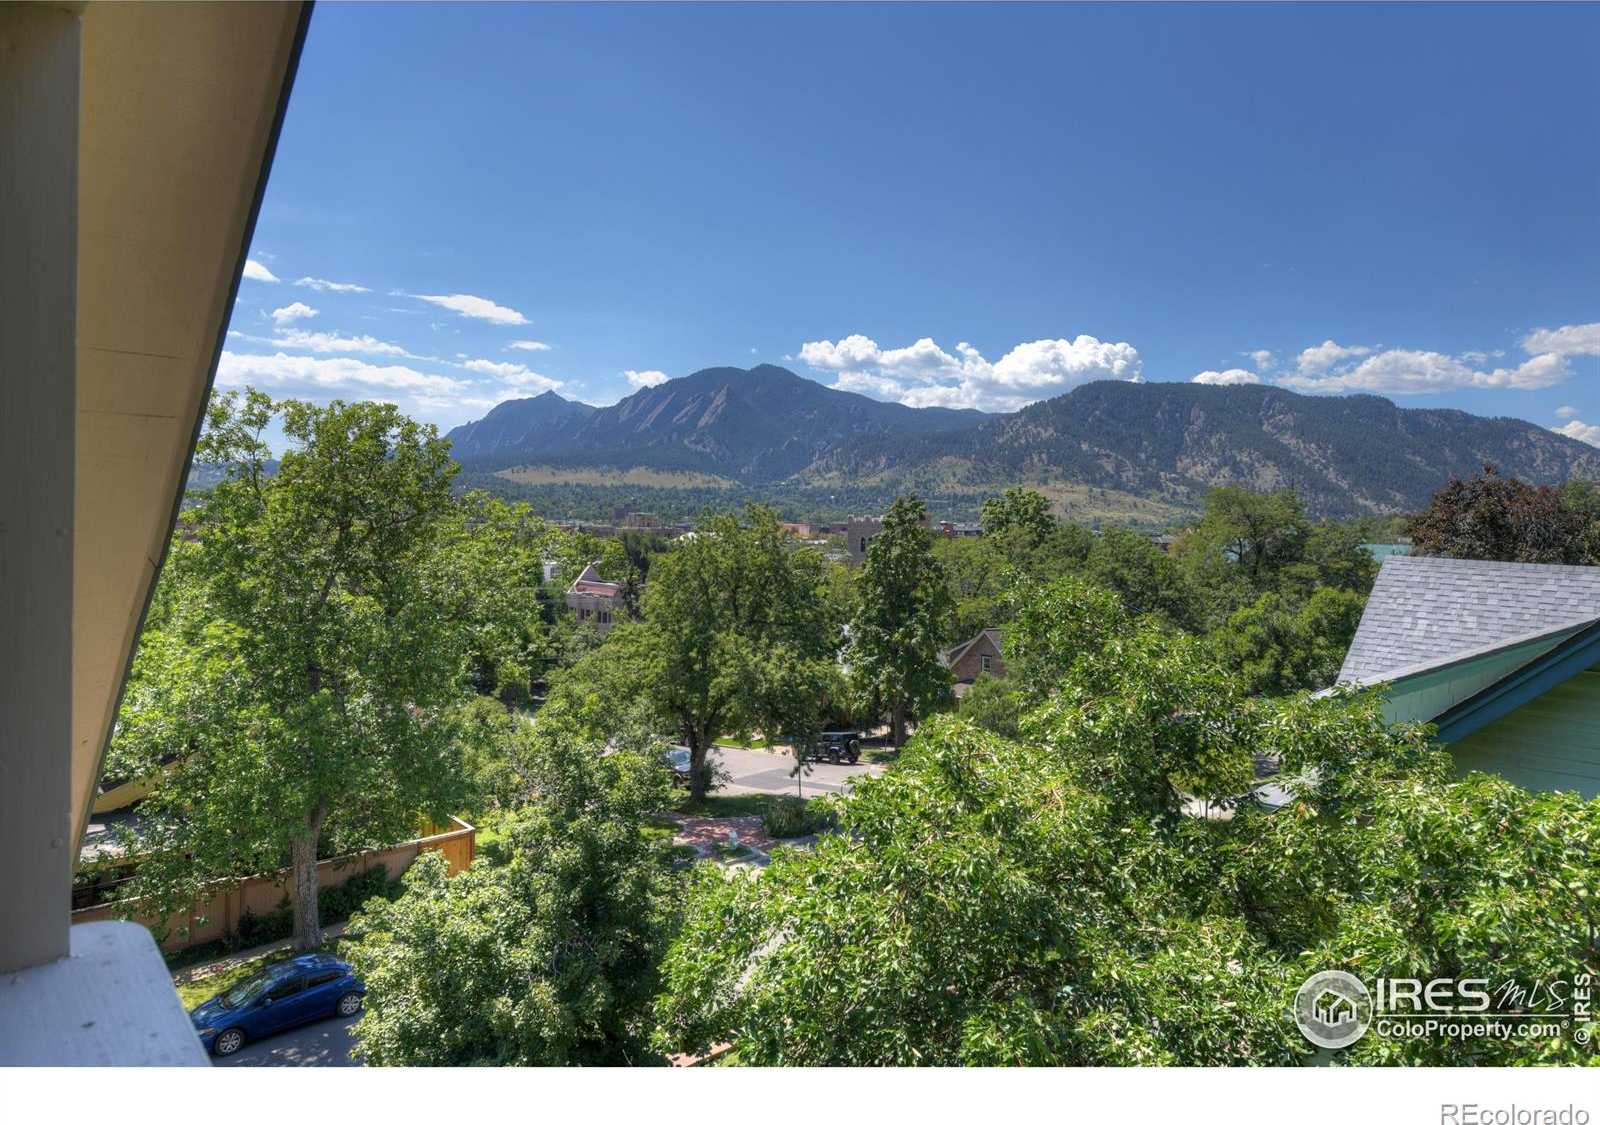 View Boulder, CO 80304 house